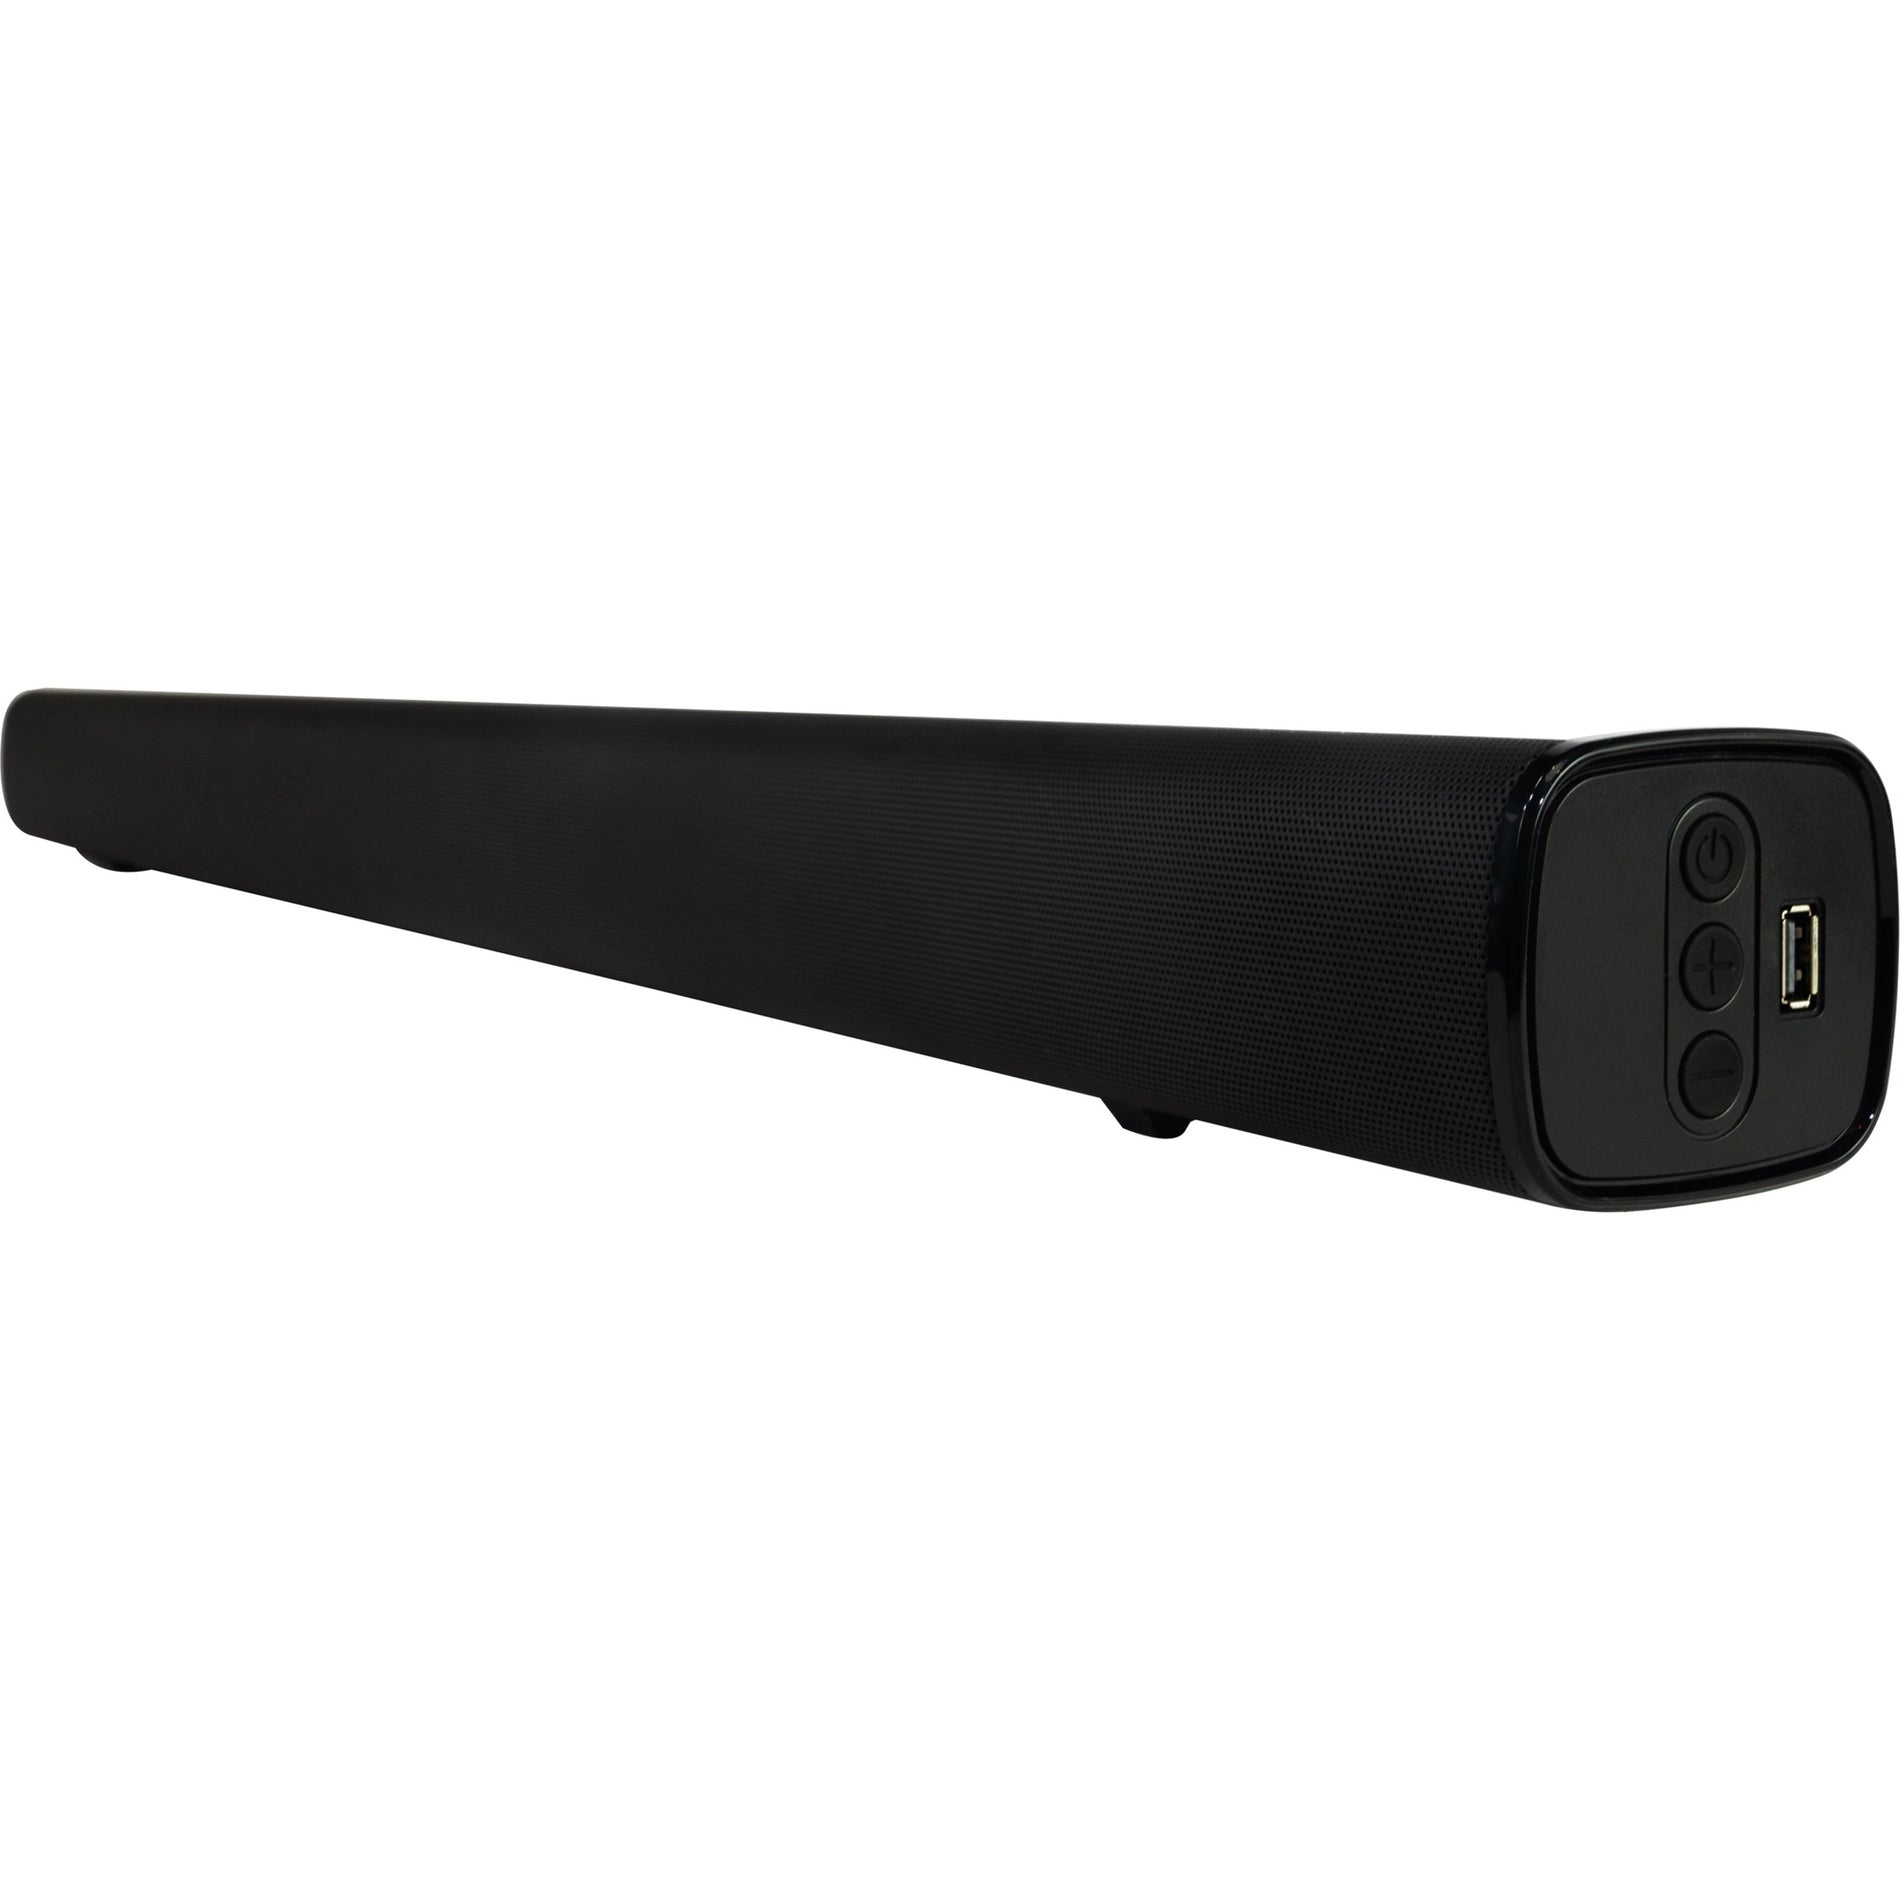 AVerMedia GS-68C Soundbar With Subwoofer, 2.1 Bluetooth Speaker - 80W RMS